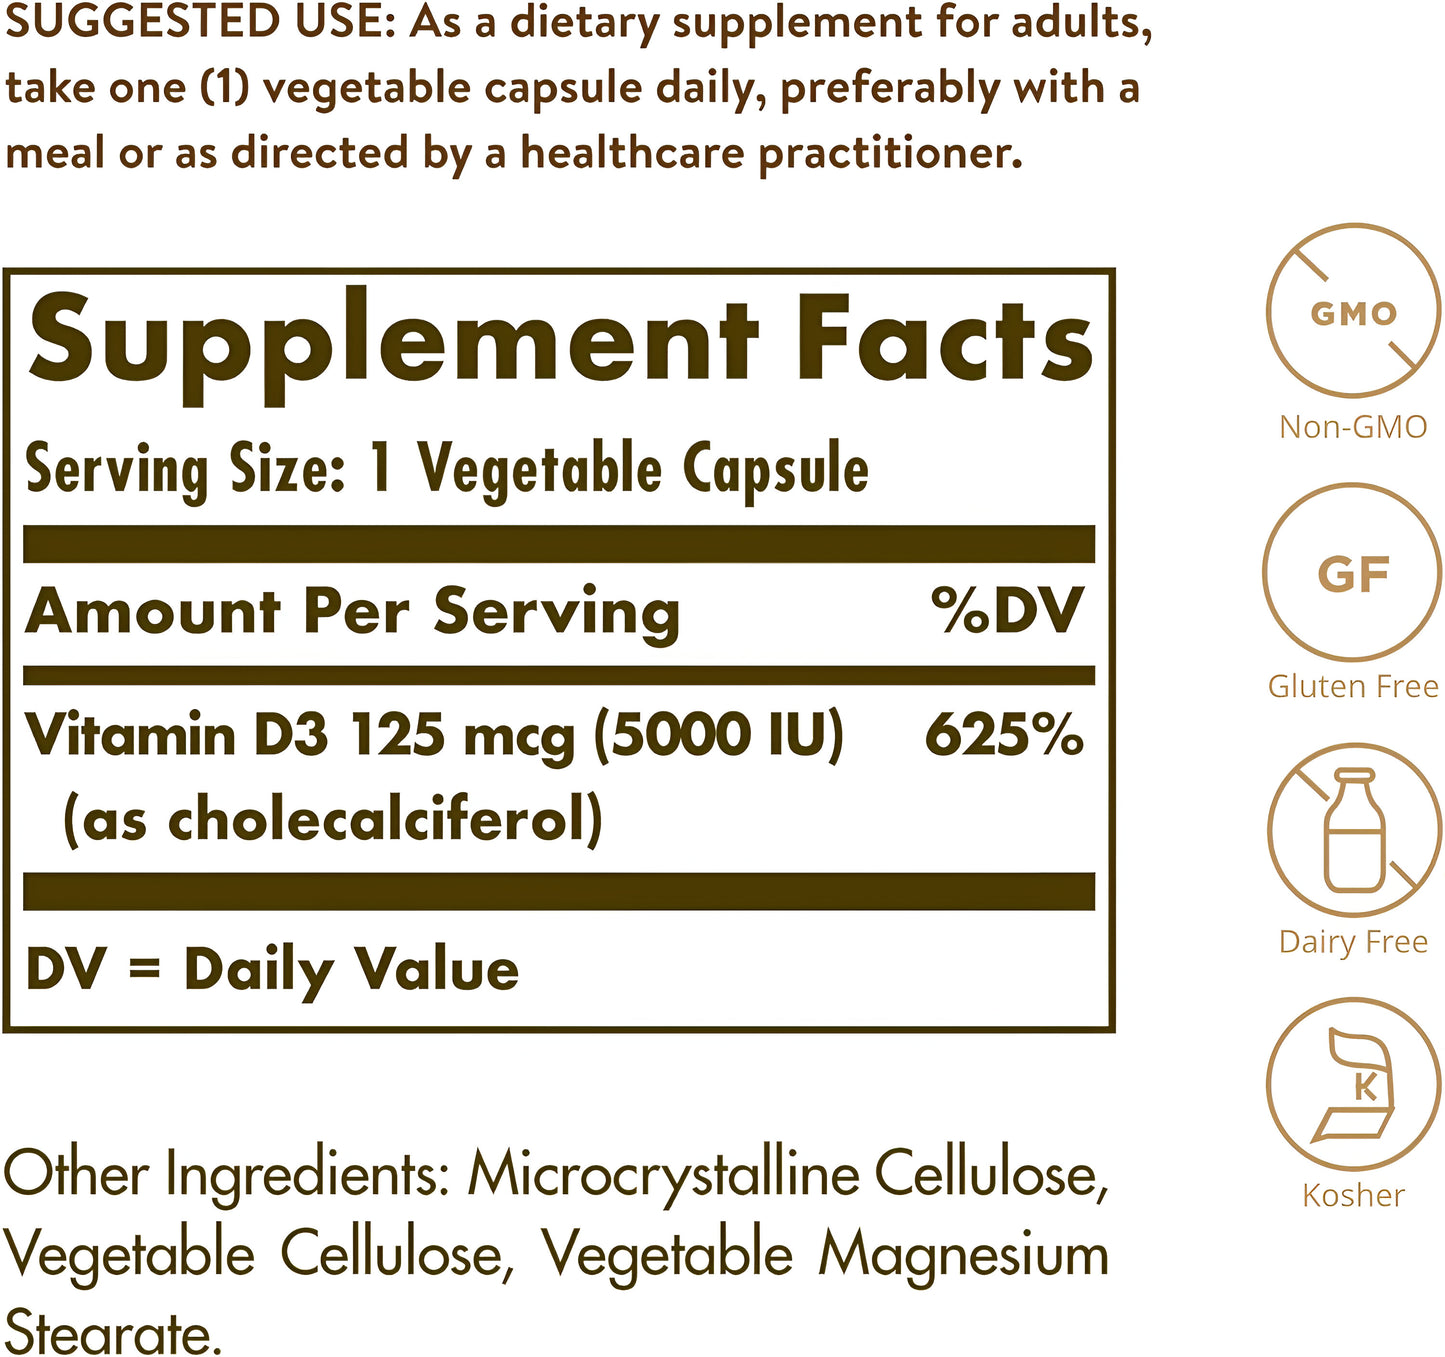 Solgar Vitamin D3 (Cholecalciferol) Capsulas